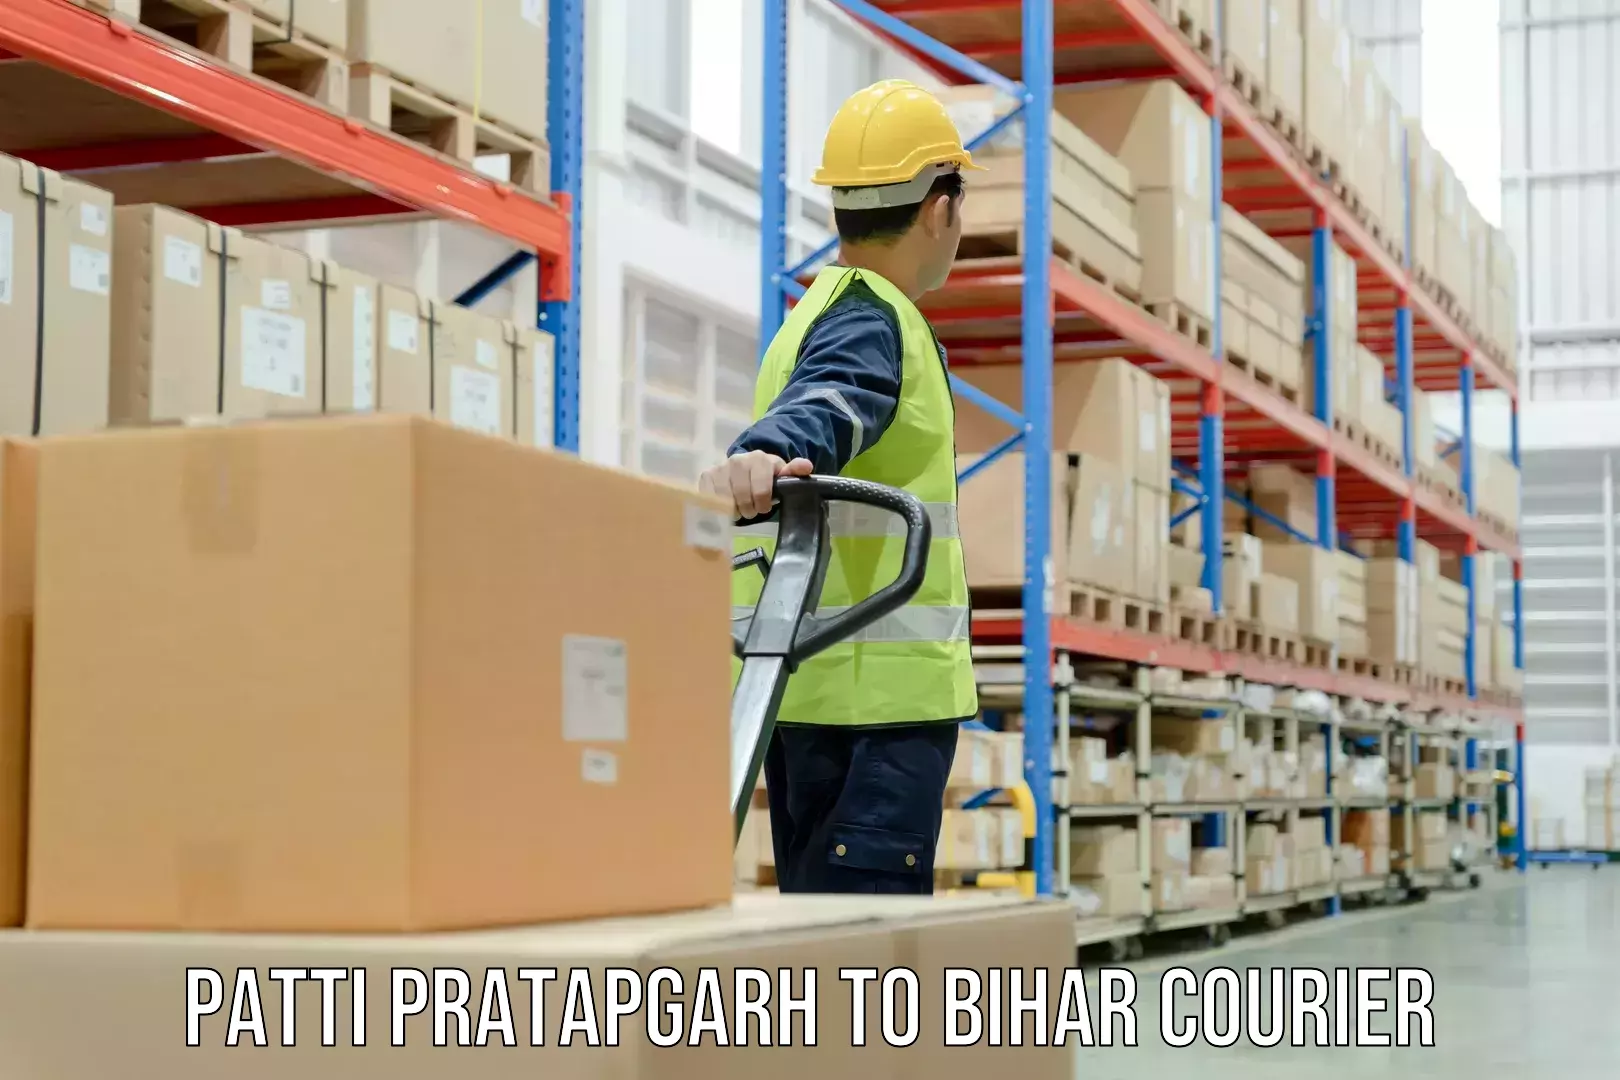 Specialized shipment handling Patti Pratapgarh to Bihar